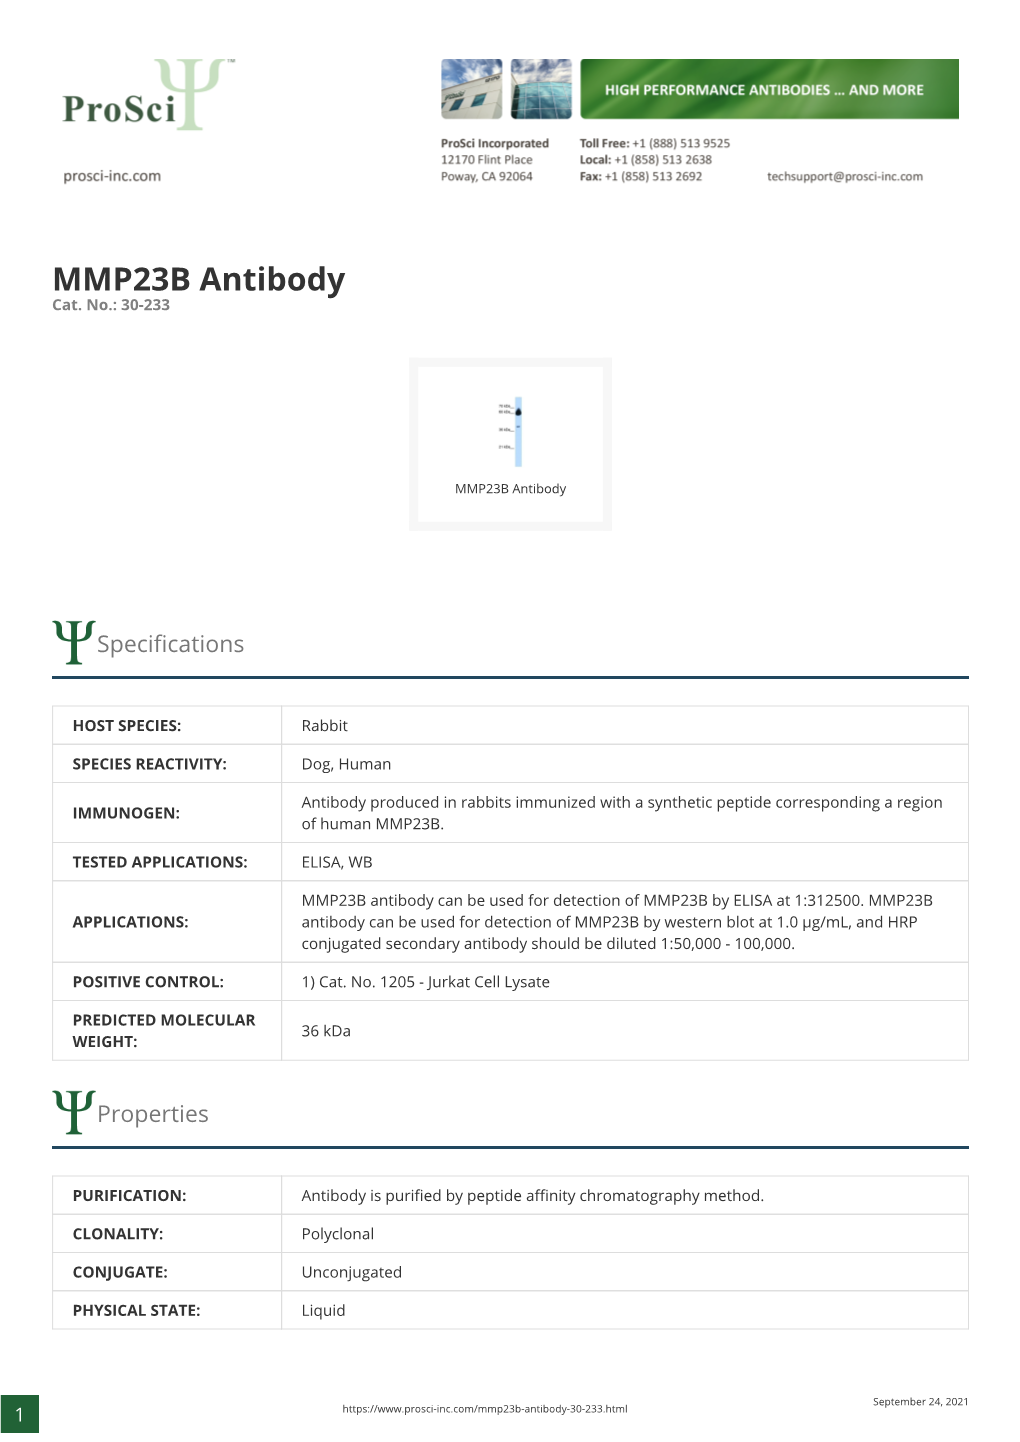 MMP23B Antibody Cat